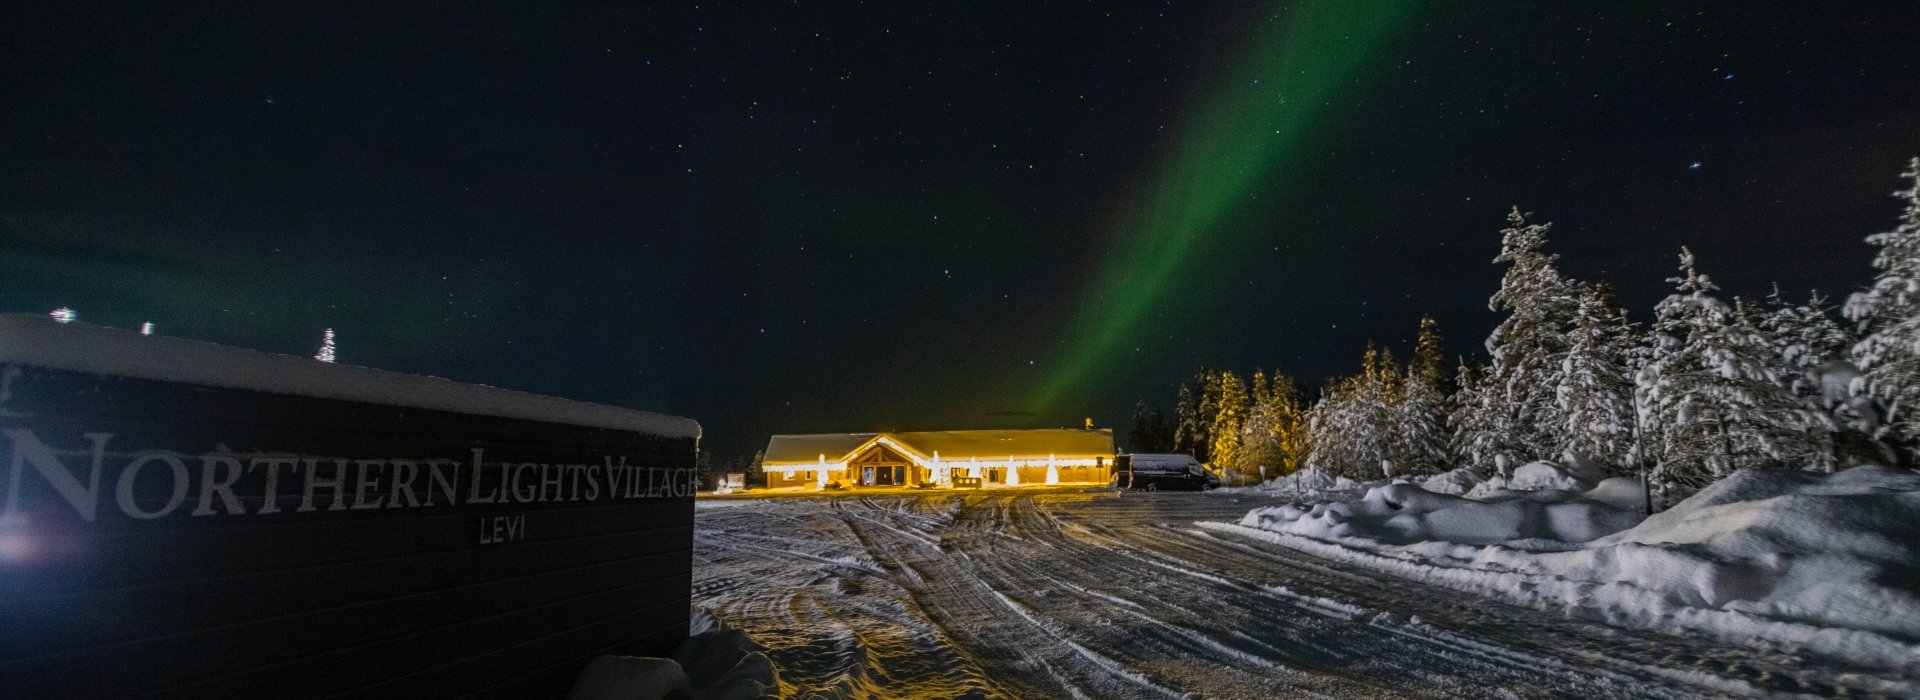 About | Northern Lights Village Saariselkä